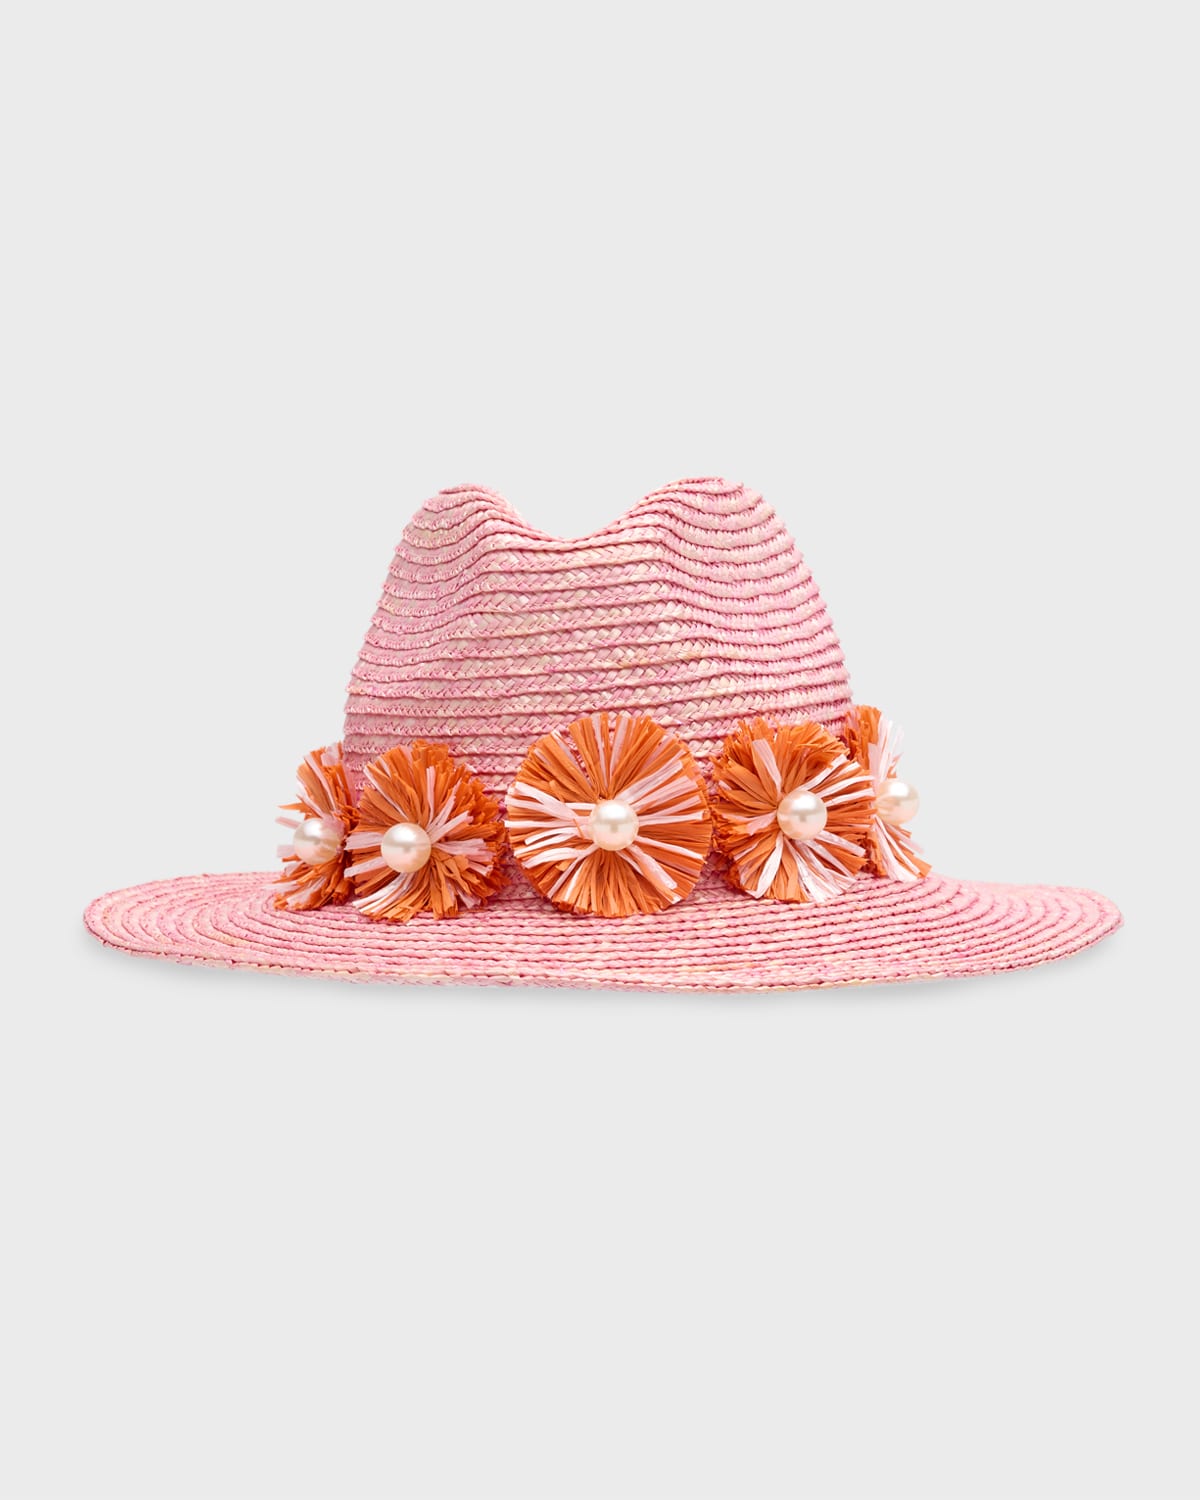 Lele Sadoughi Confetti Embellished Straw Hat In Coral Sunset